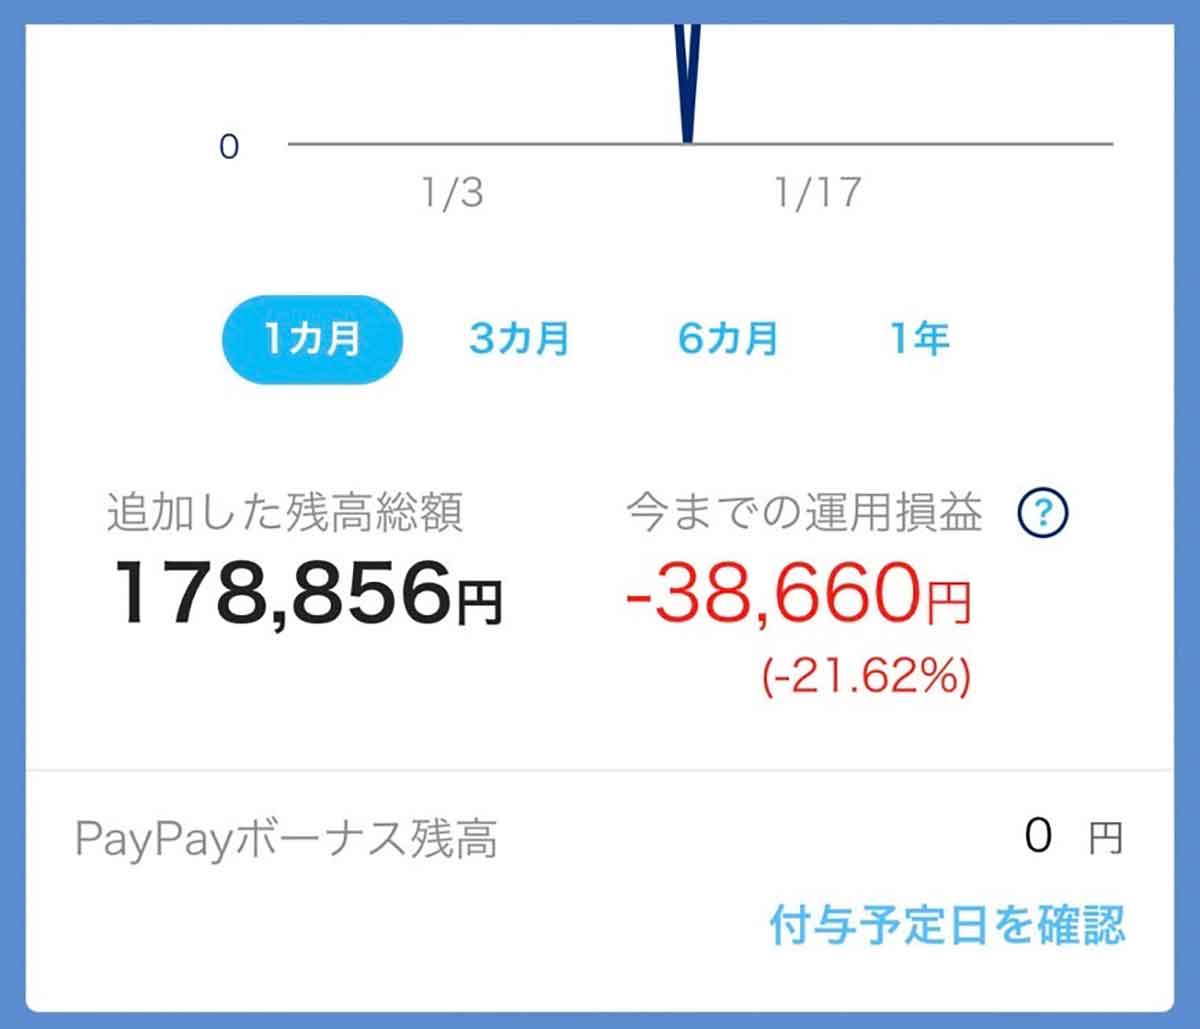 PayPayボーナス運用、2022年1月末時点で3万8,660円（21.62％）の損失